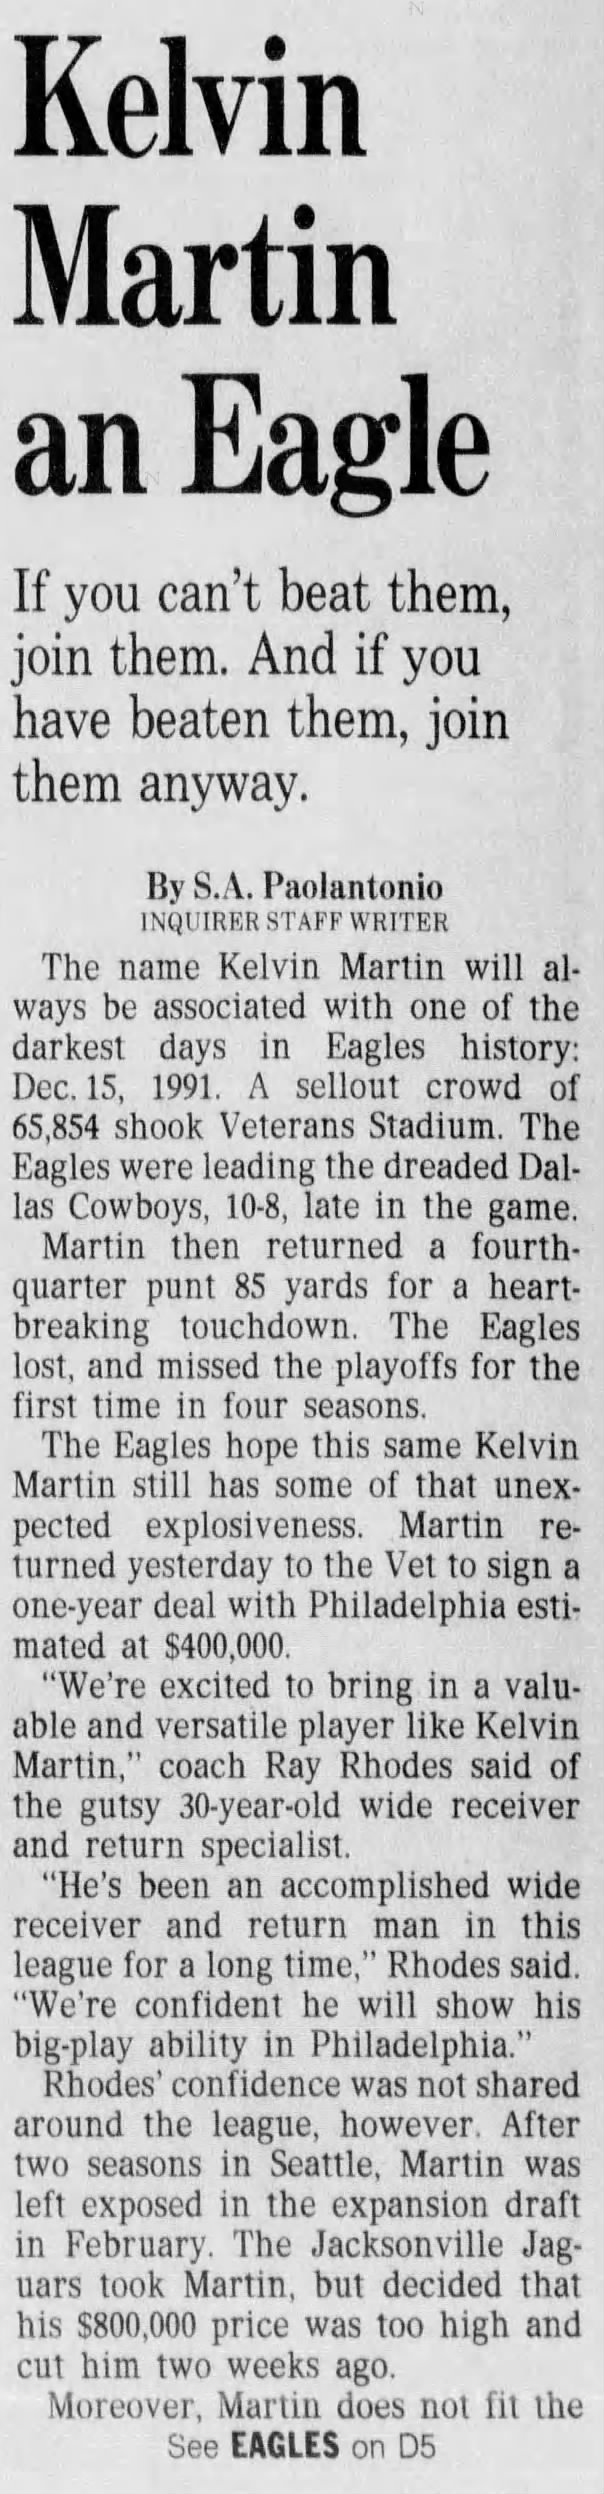 Kelvin Martin an Eagle